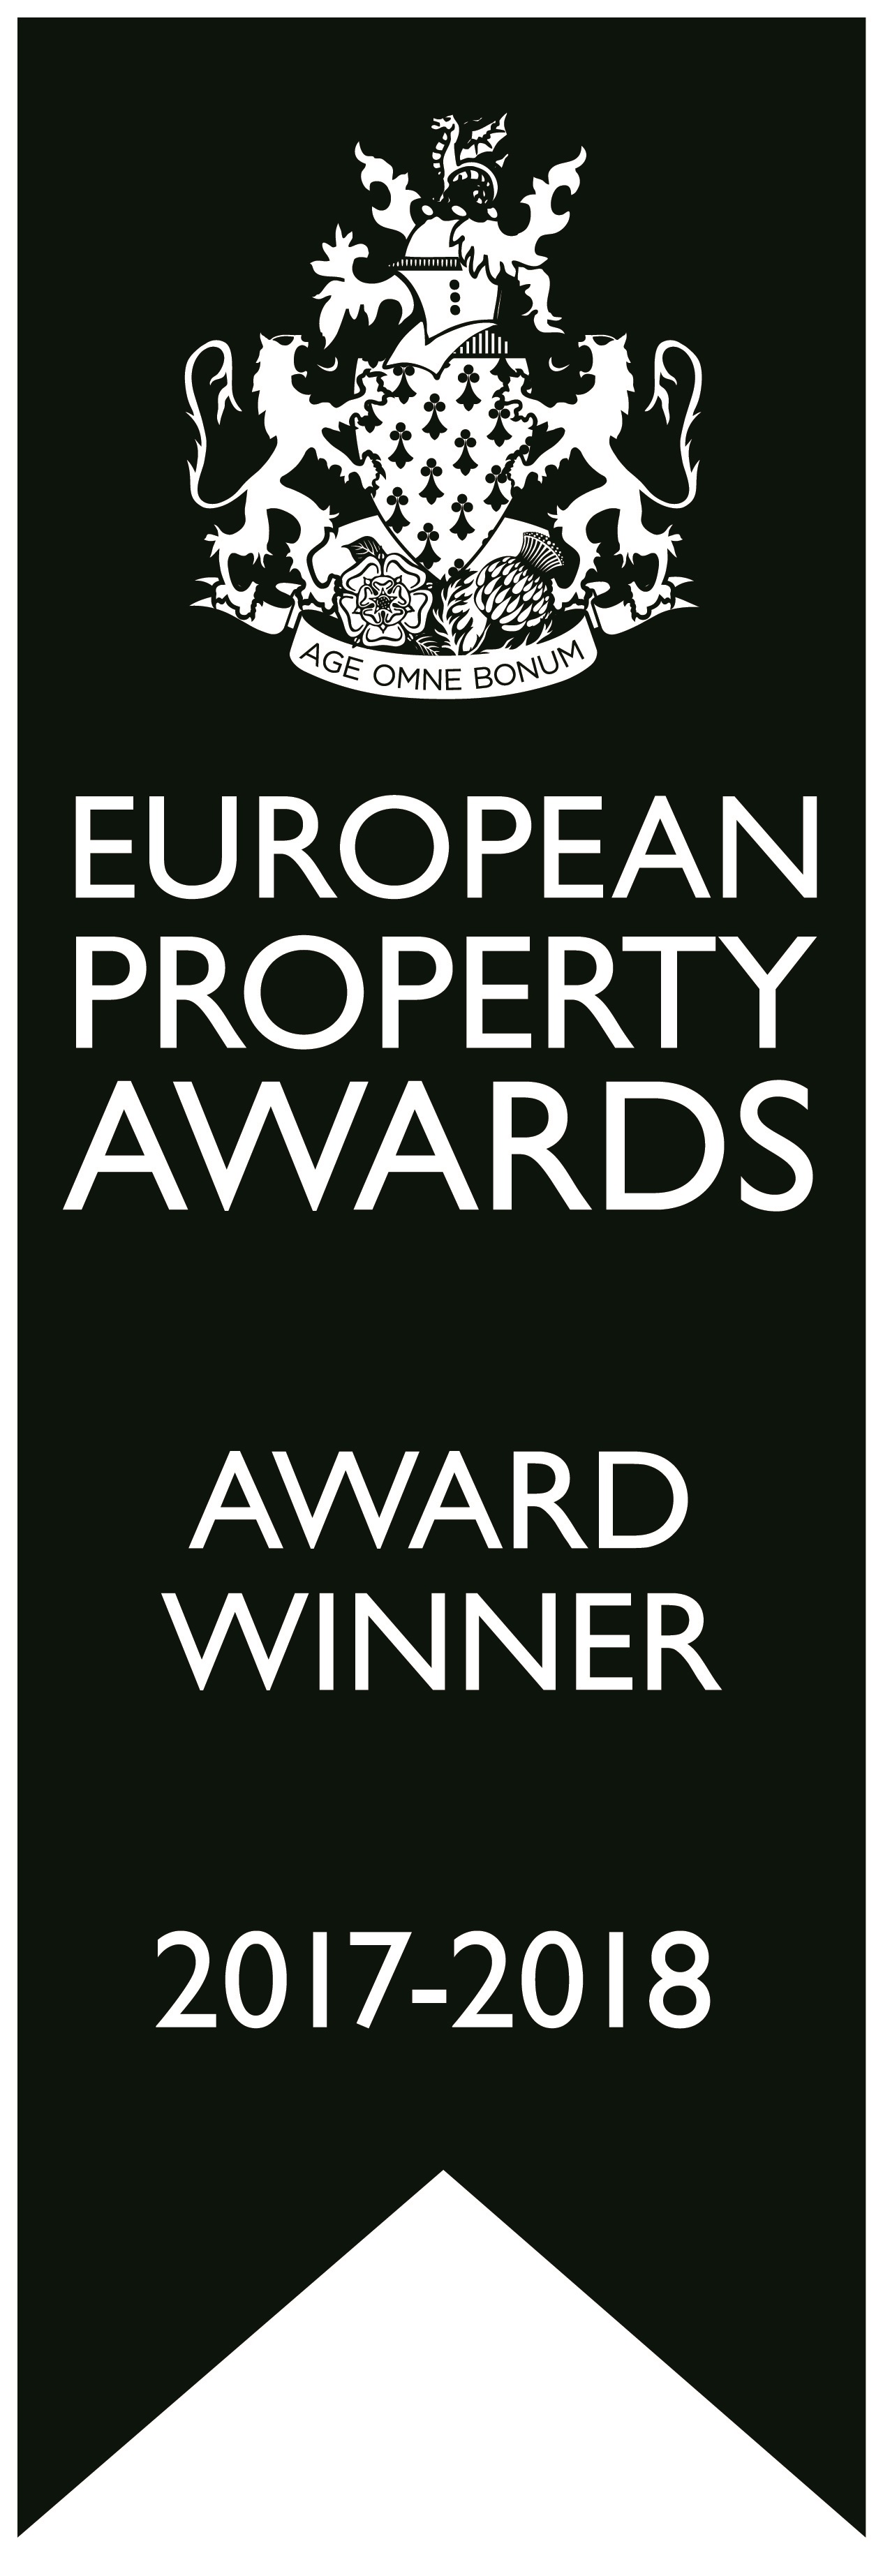  European Property Awards